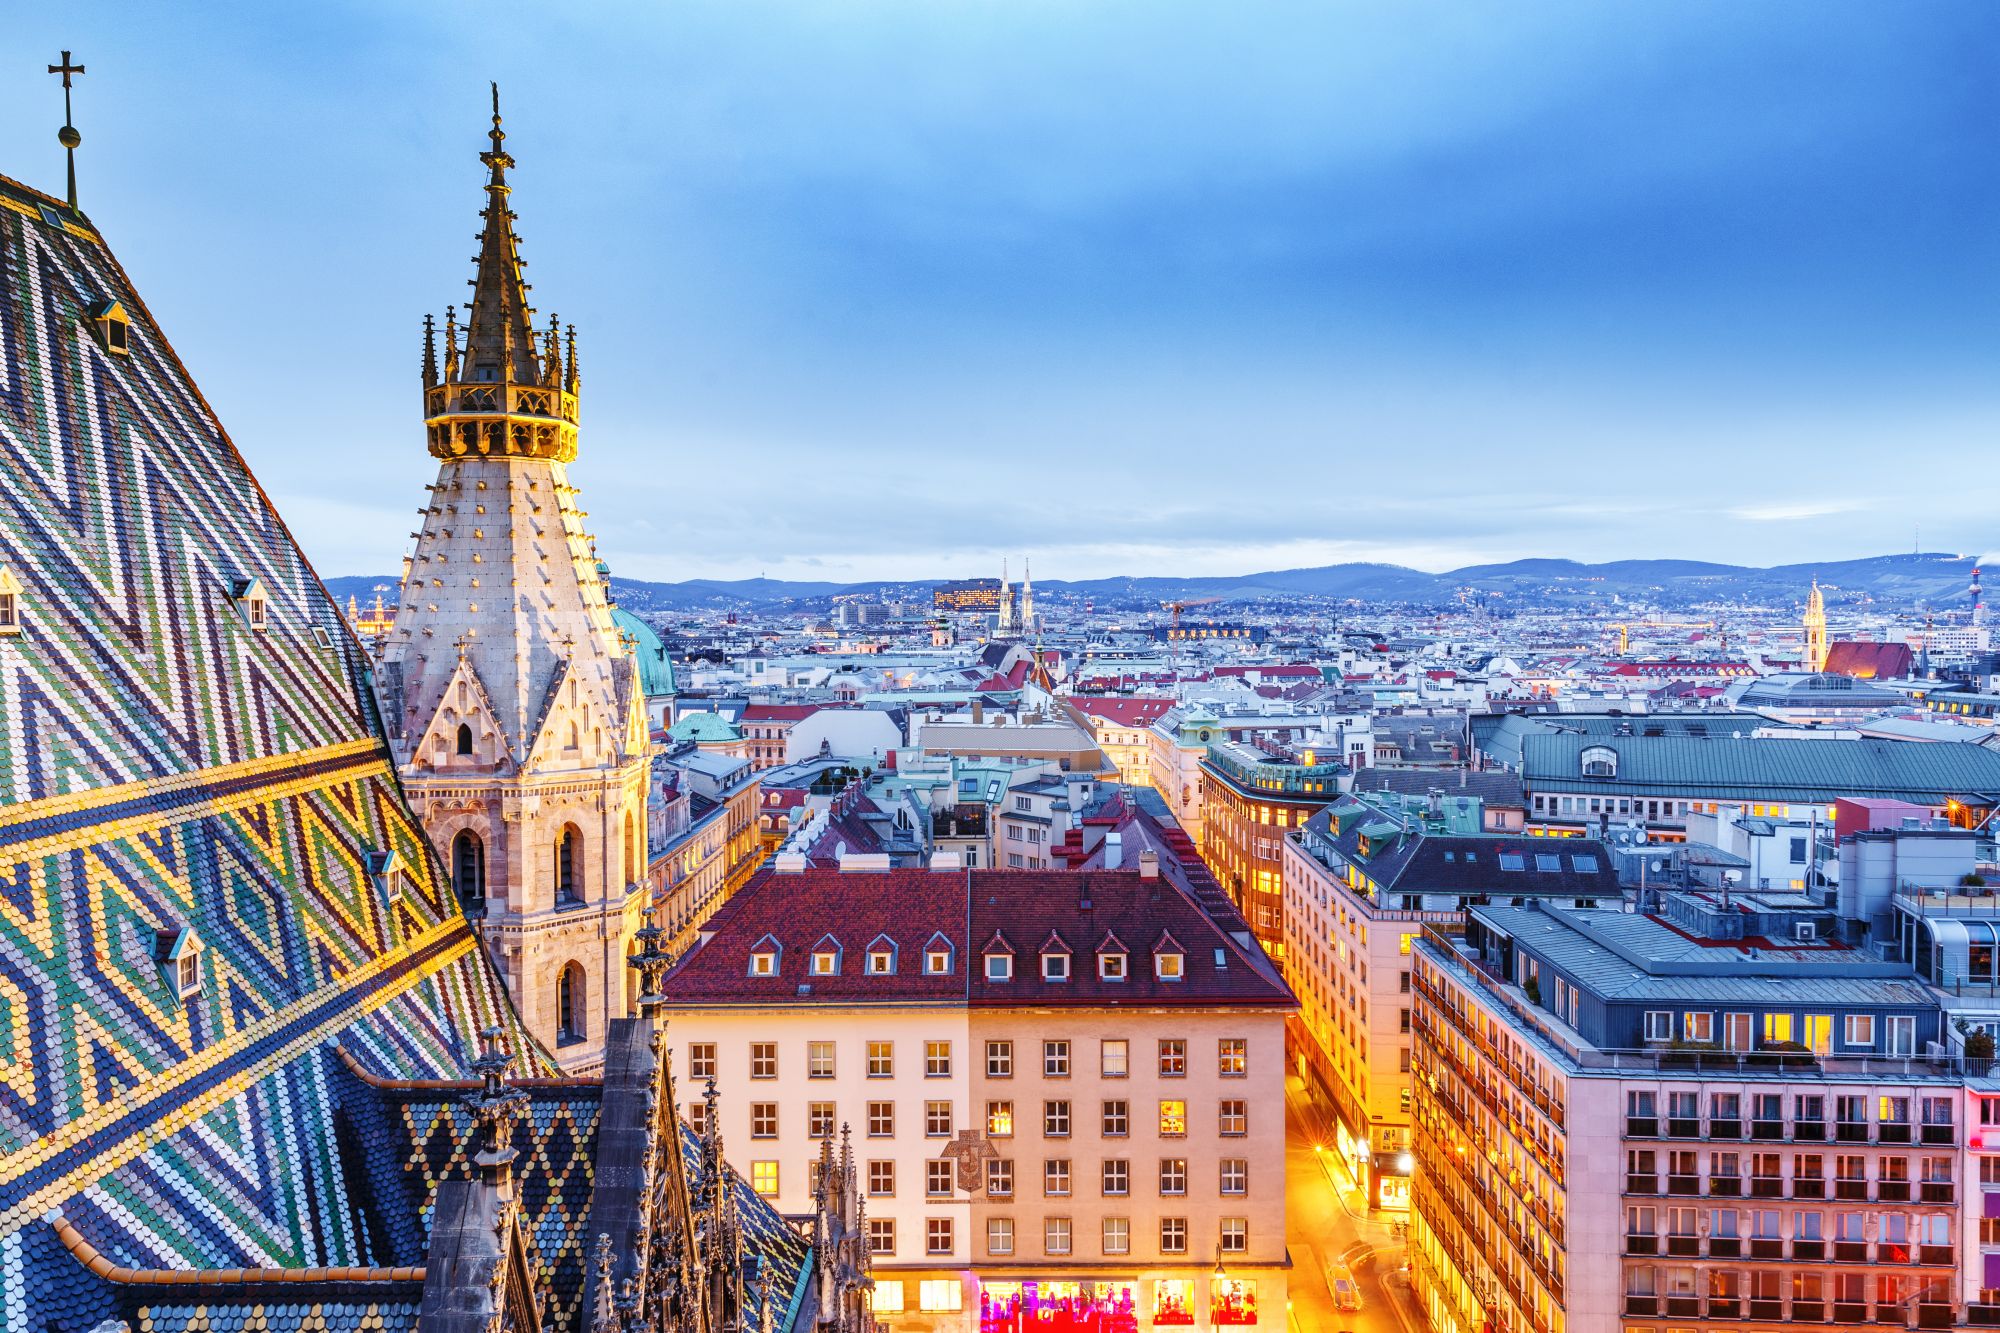 Panorama Wiednia